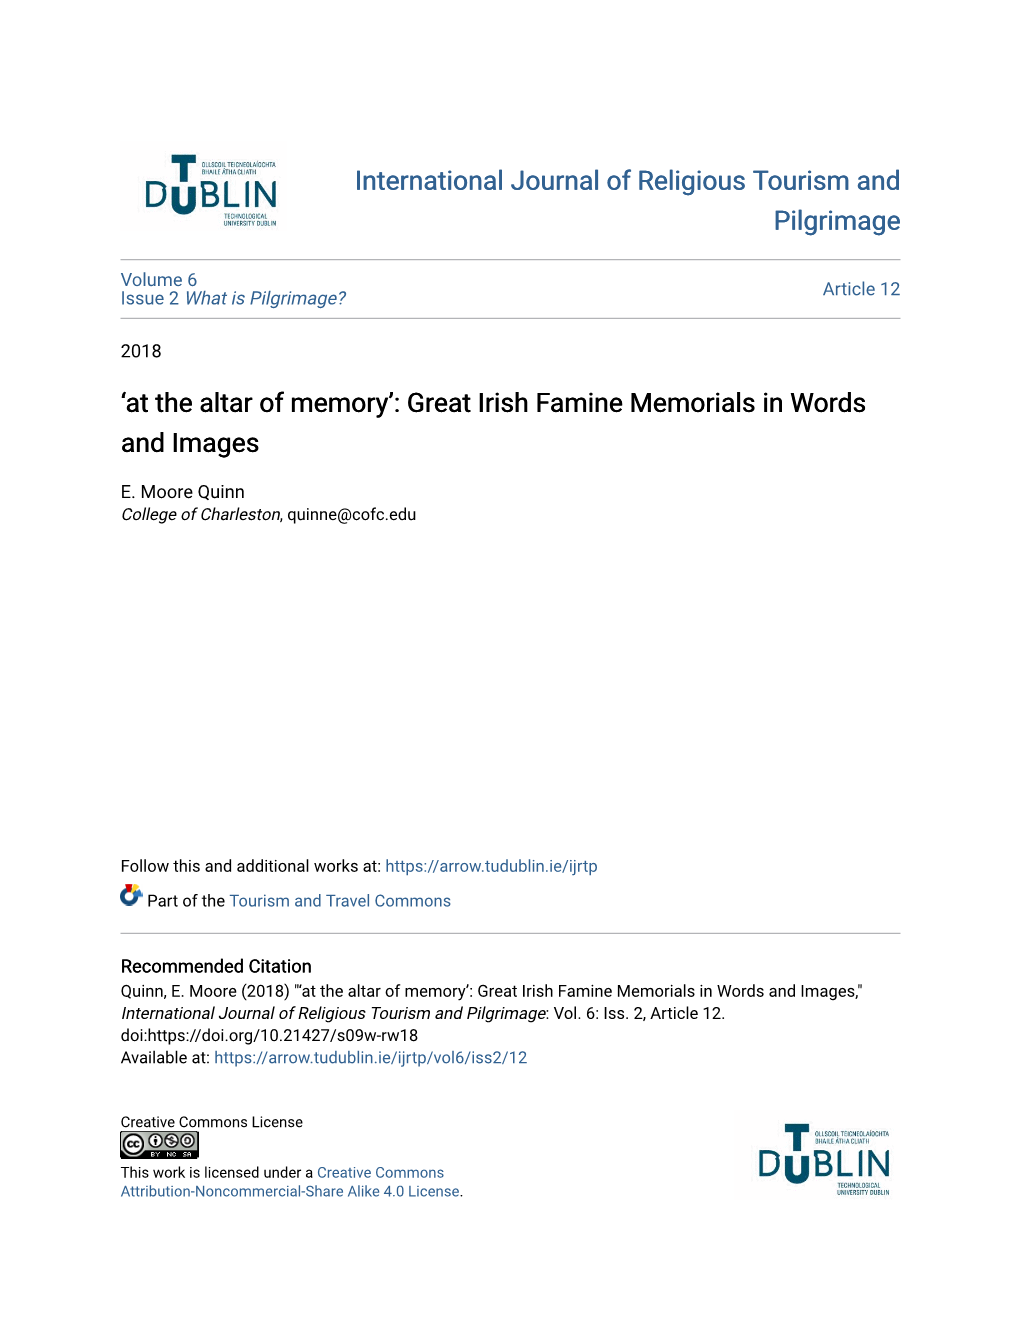 Great Irish Famine Memorials in Words and Images